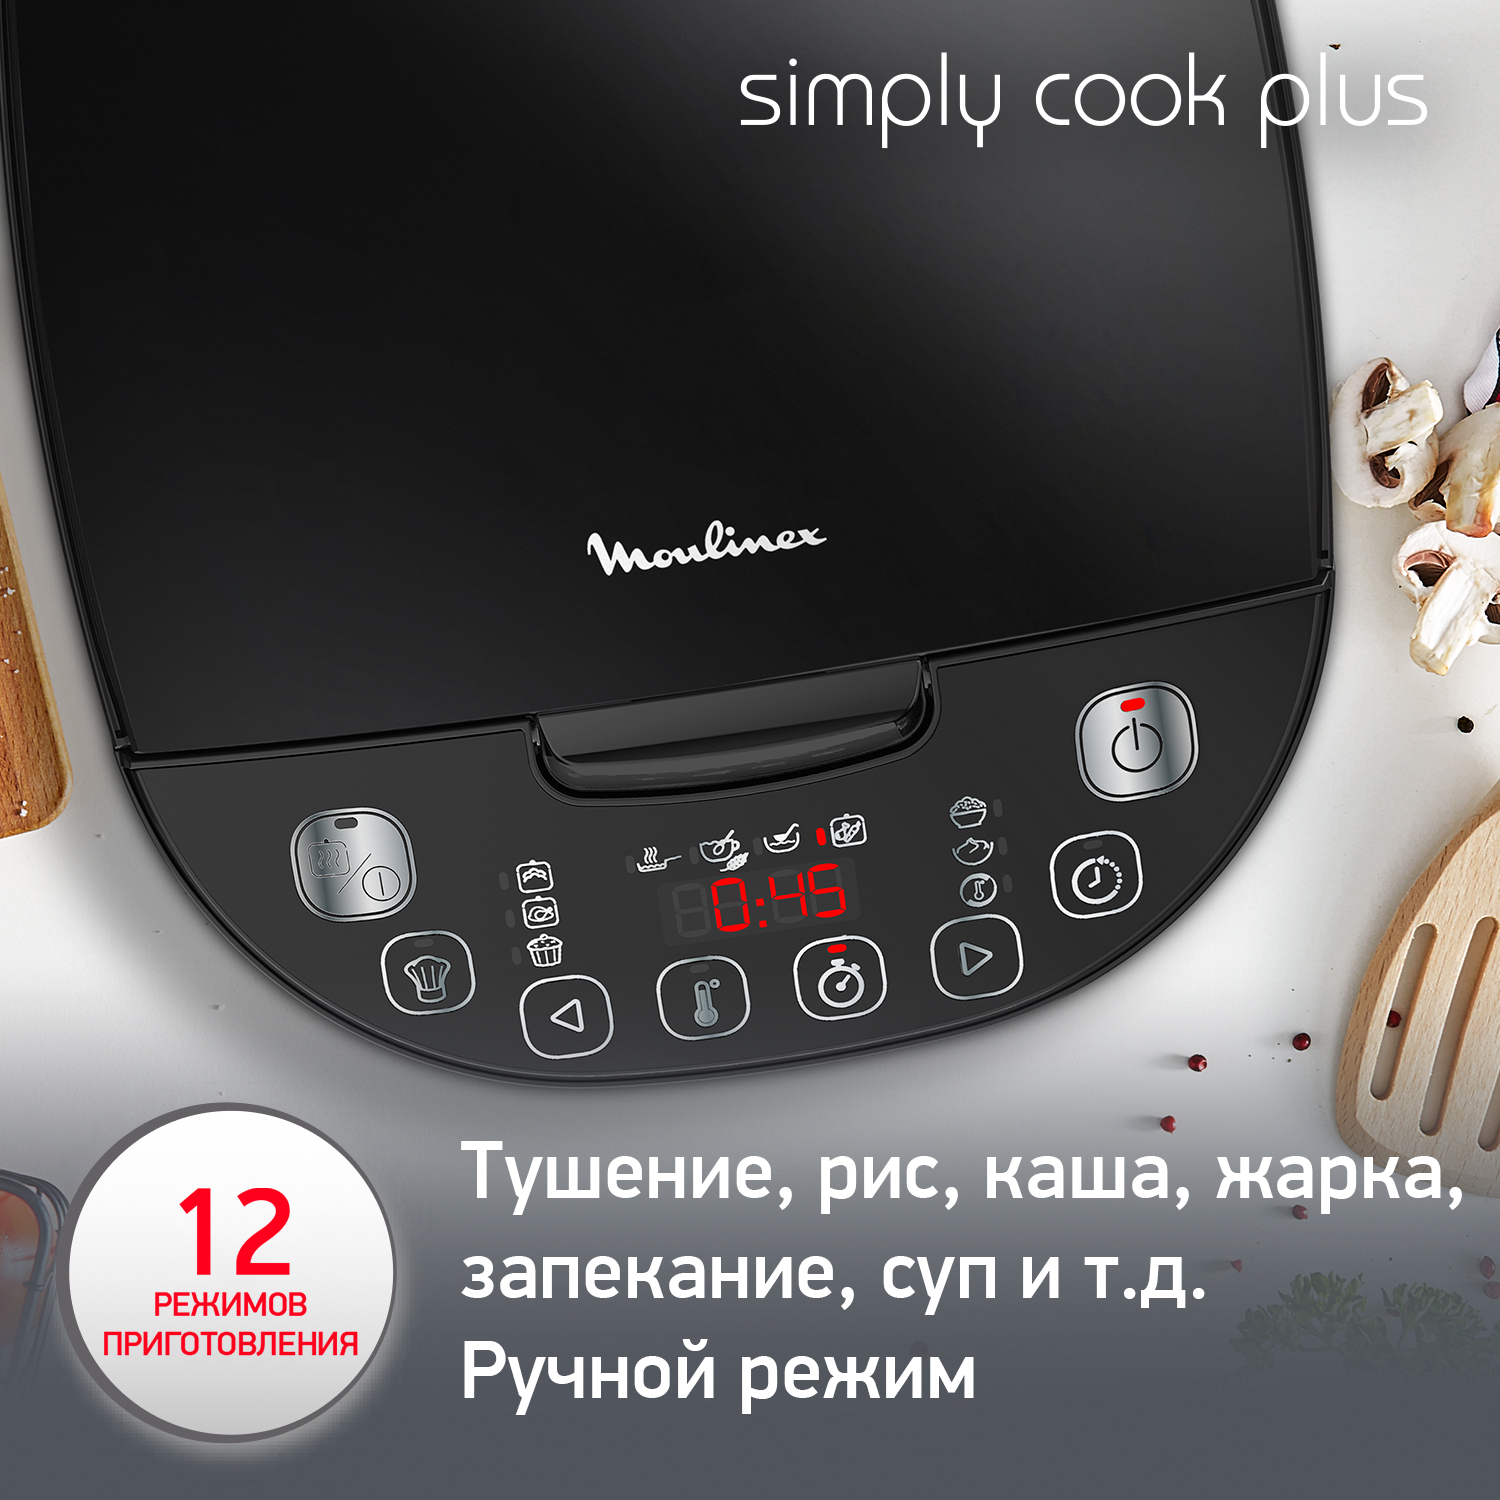 Мультиварка Moulinex Simply cook MK622832